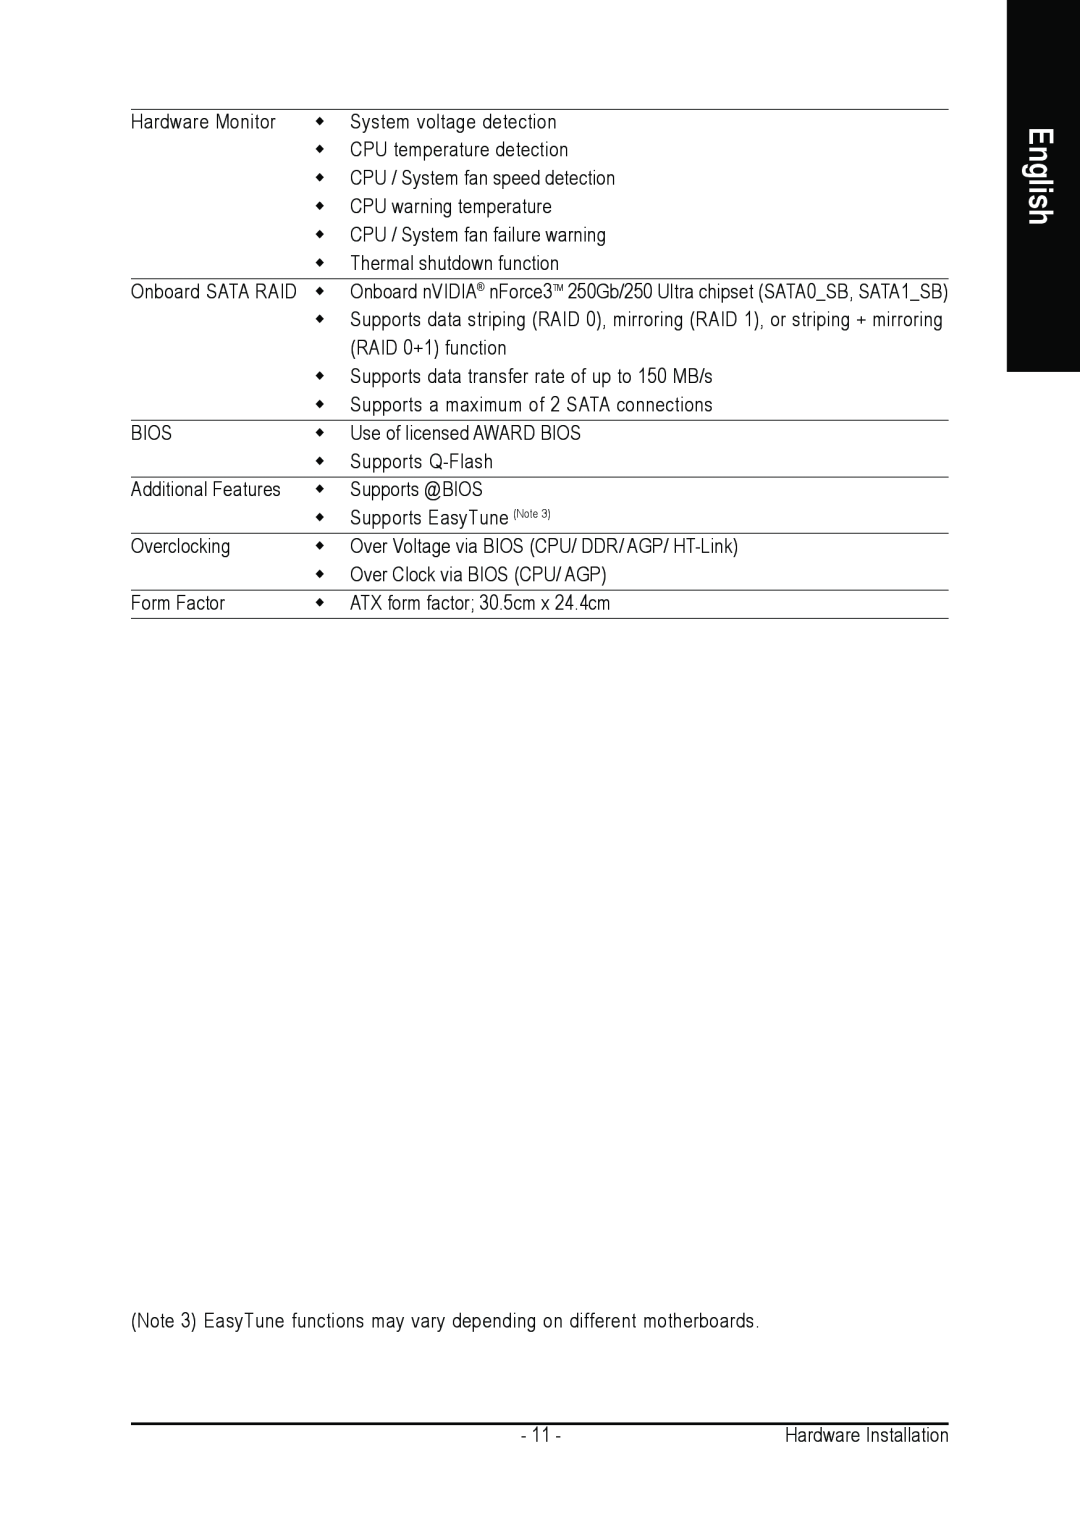 AMD GA-K8NSC-939 user manual English, Onboard SATA RAID, Additional Features 